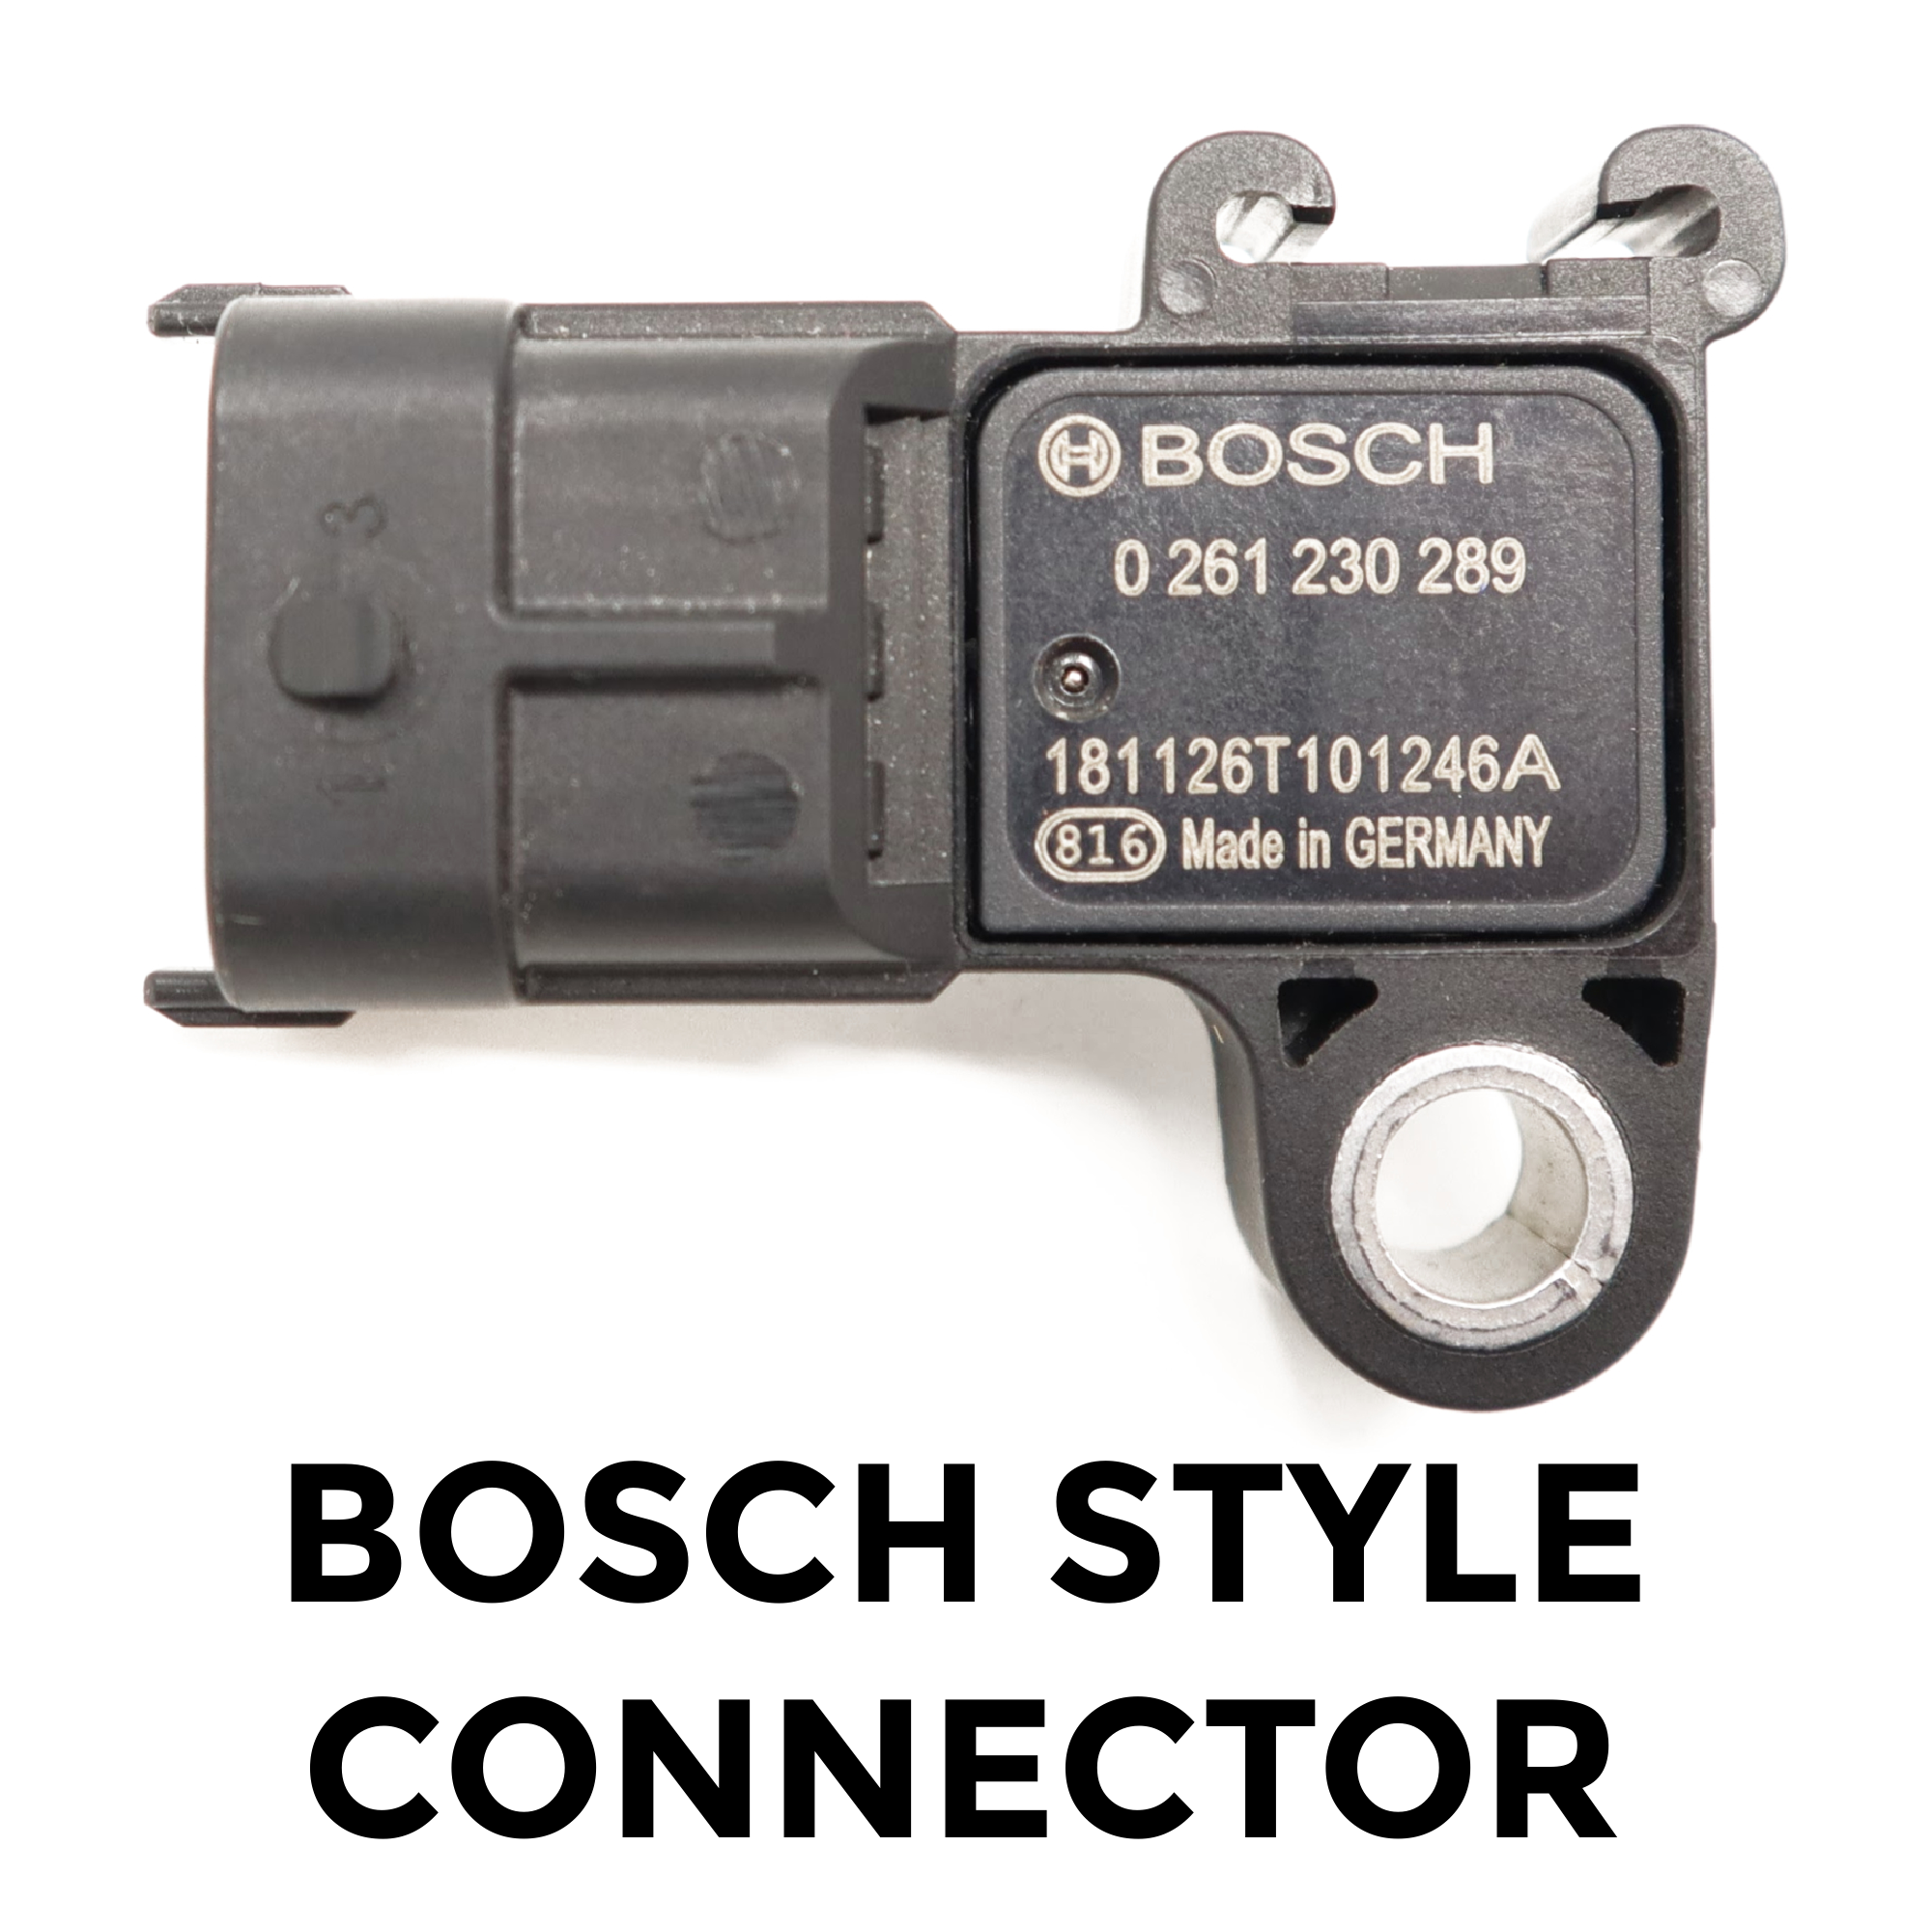 Bosch (LS3 Style) $0.00